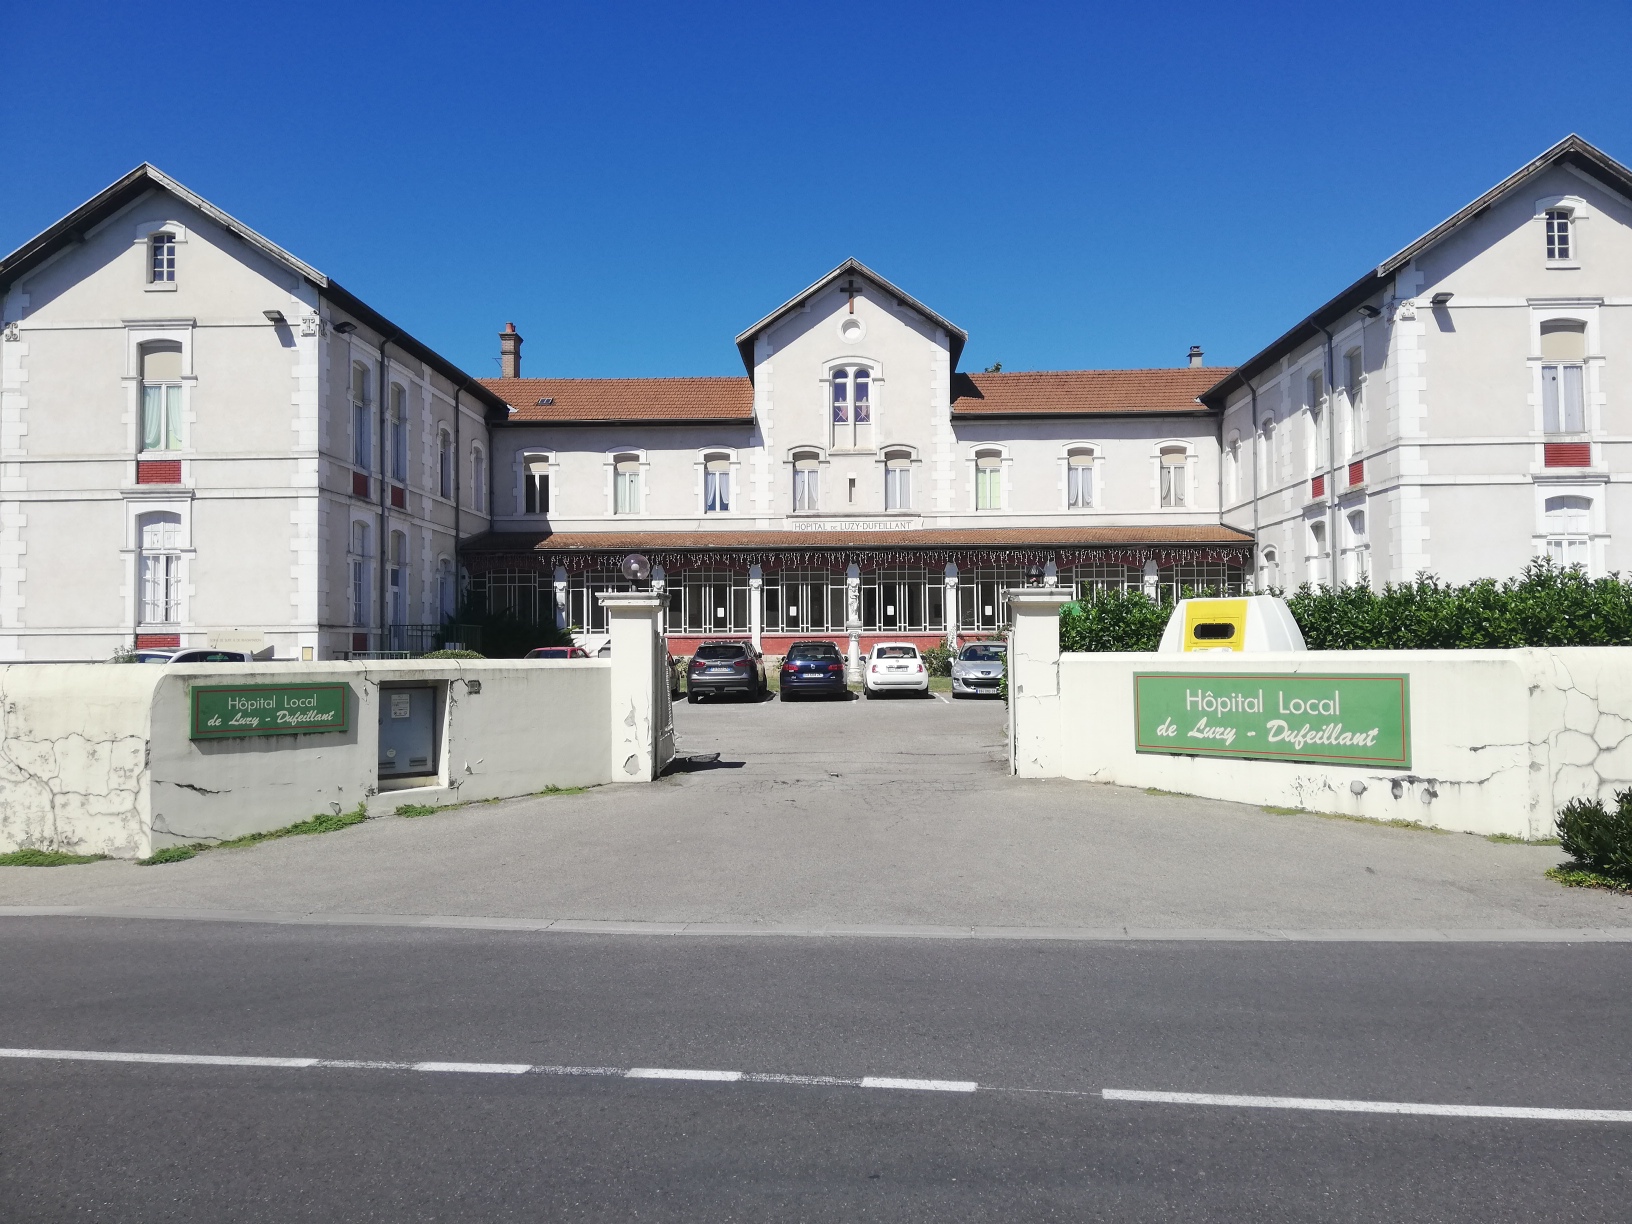 CENTRE HOSPITALIER INTERCOMMUNAL de Luzy-Dufeillant (Beaurepaire)